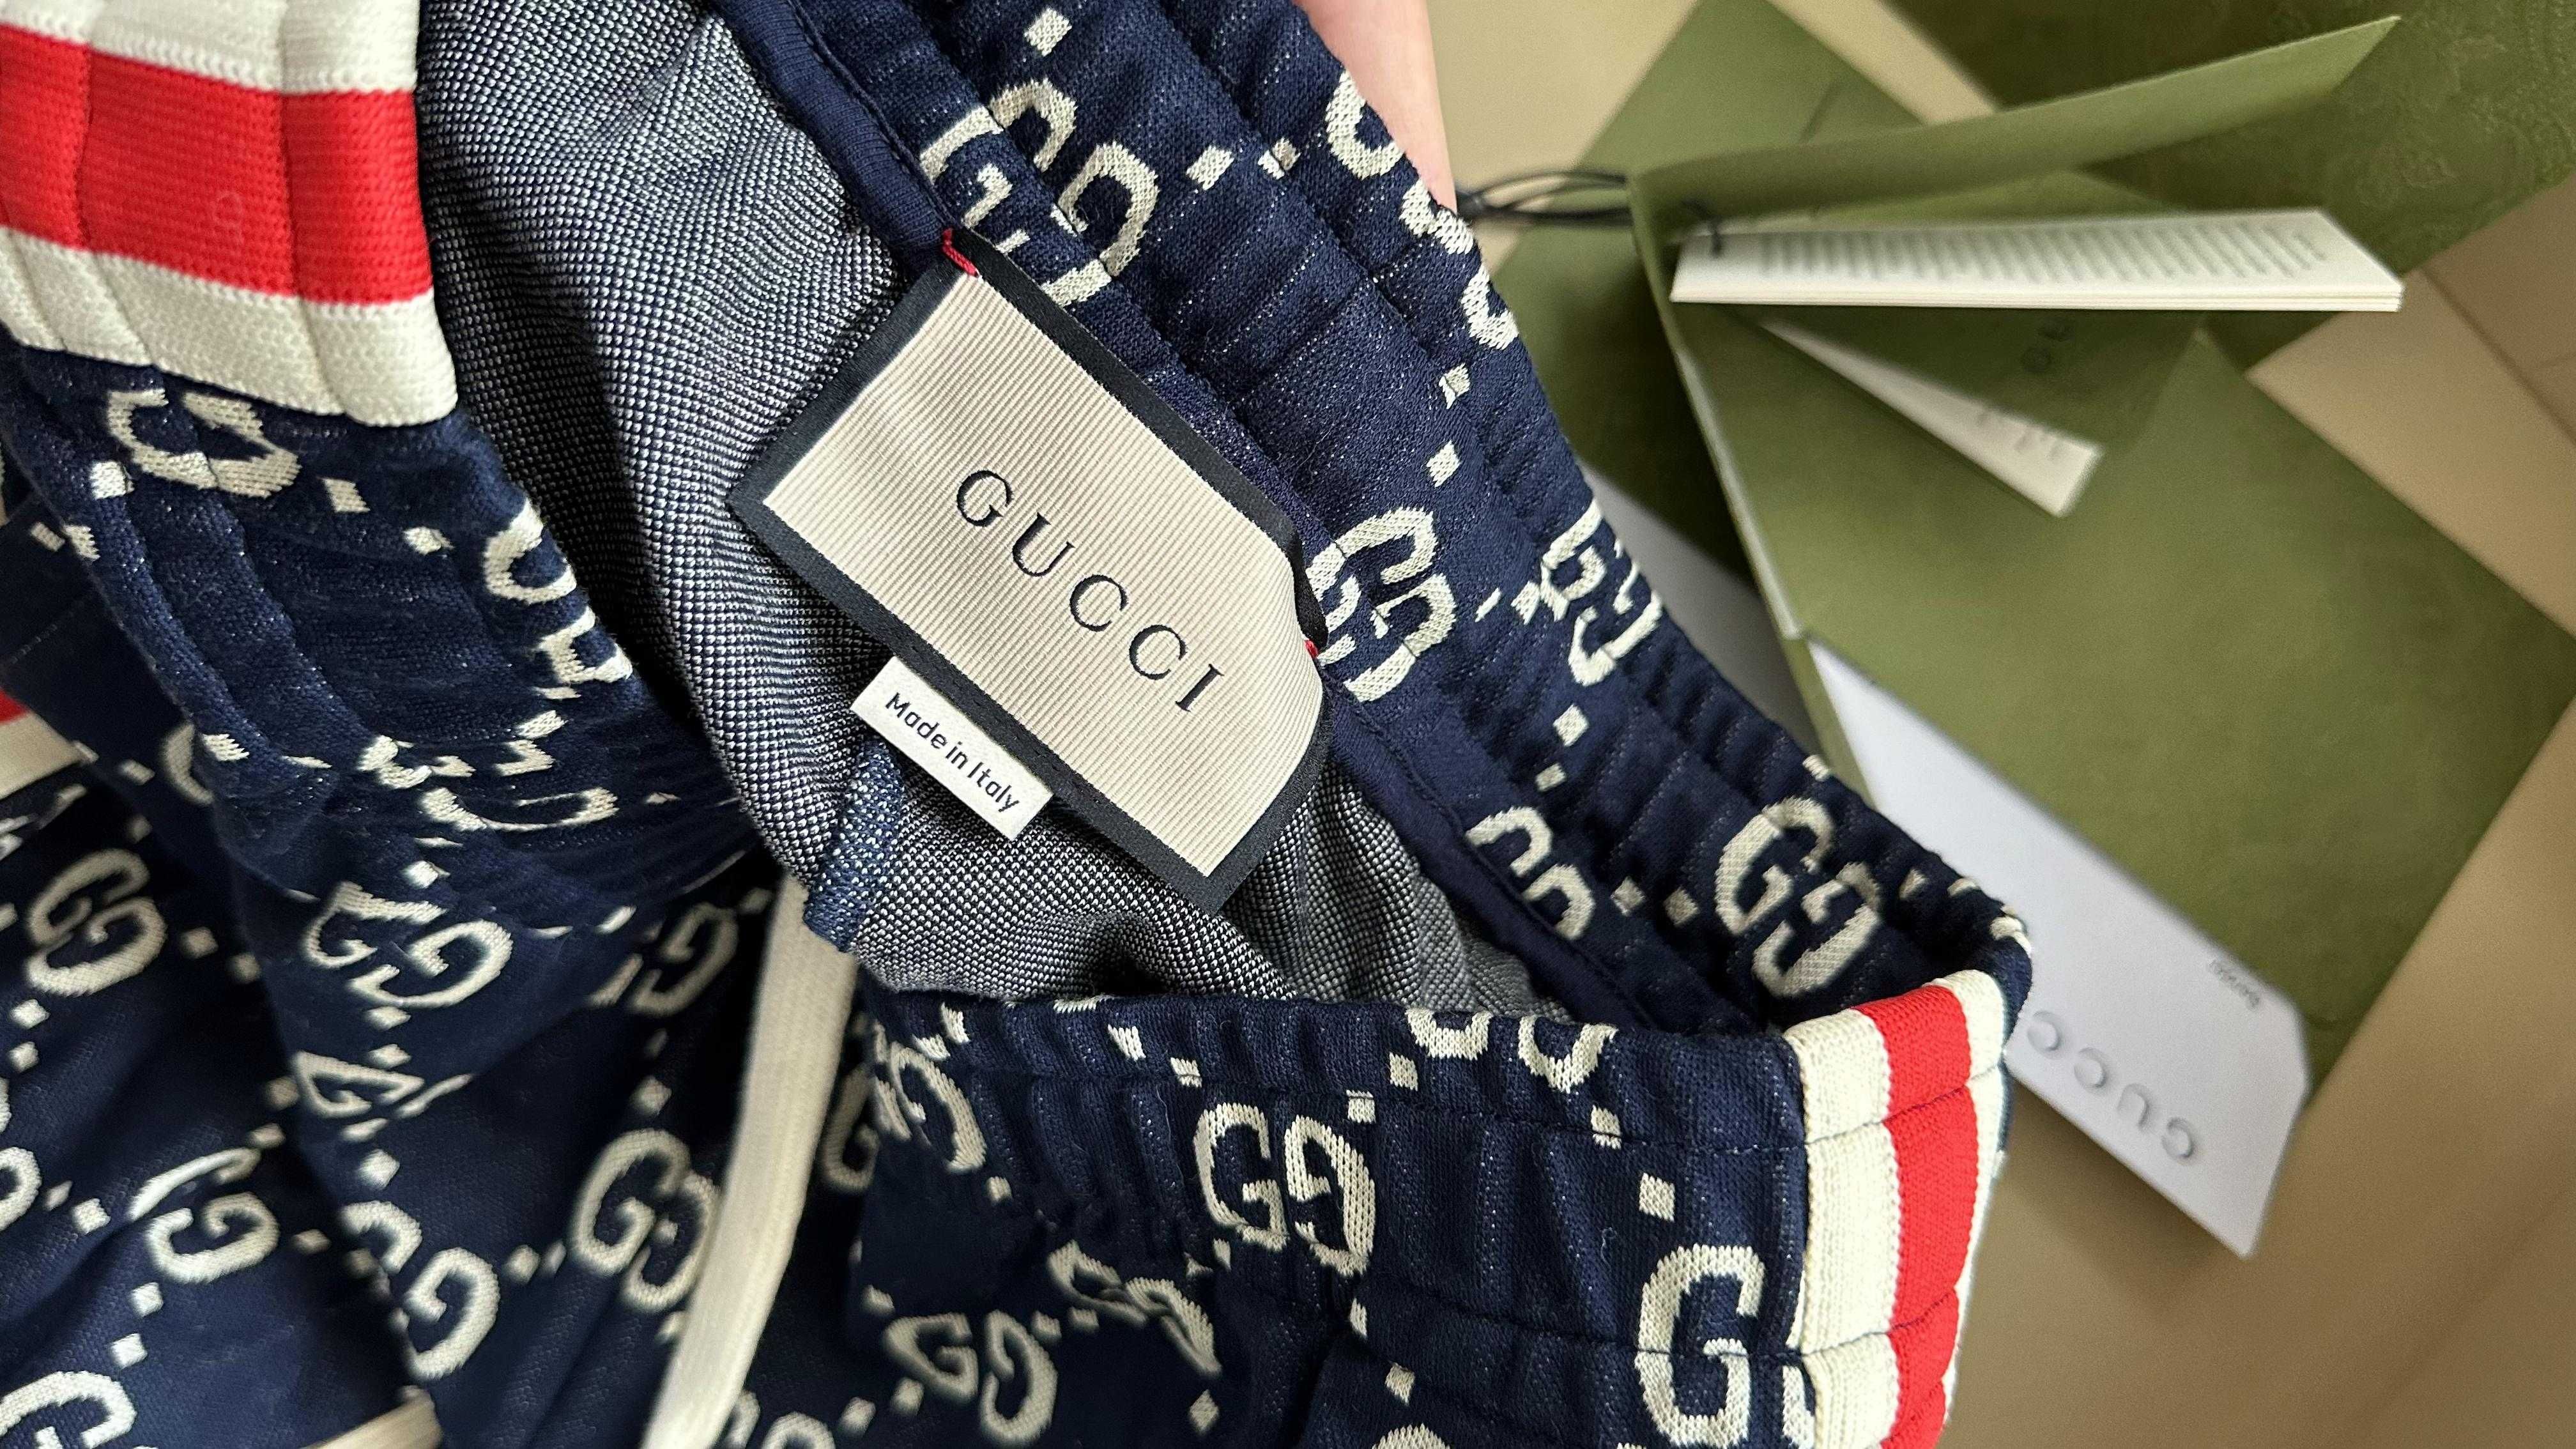 Compleu Gucci GG jacquard (jacheta marimea M, pantaloni marimea S)